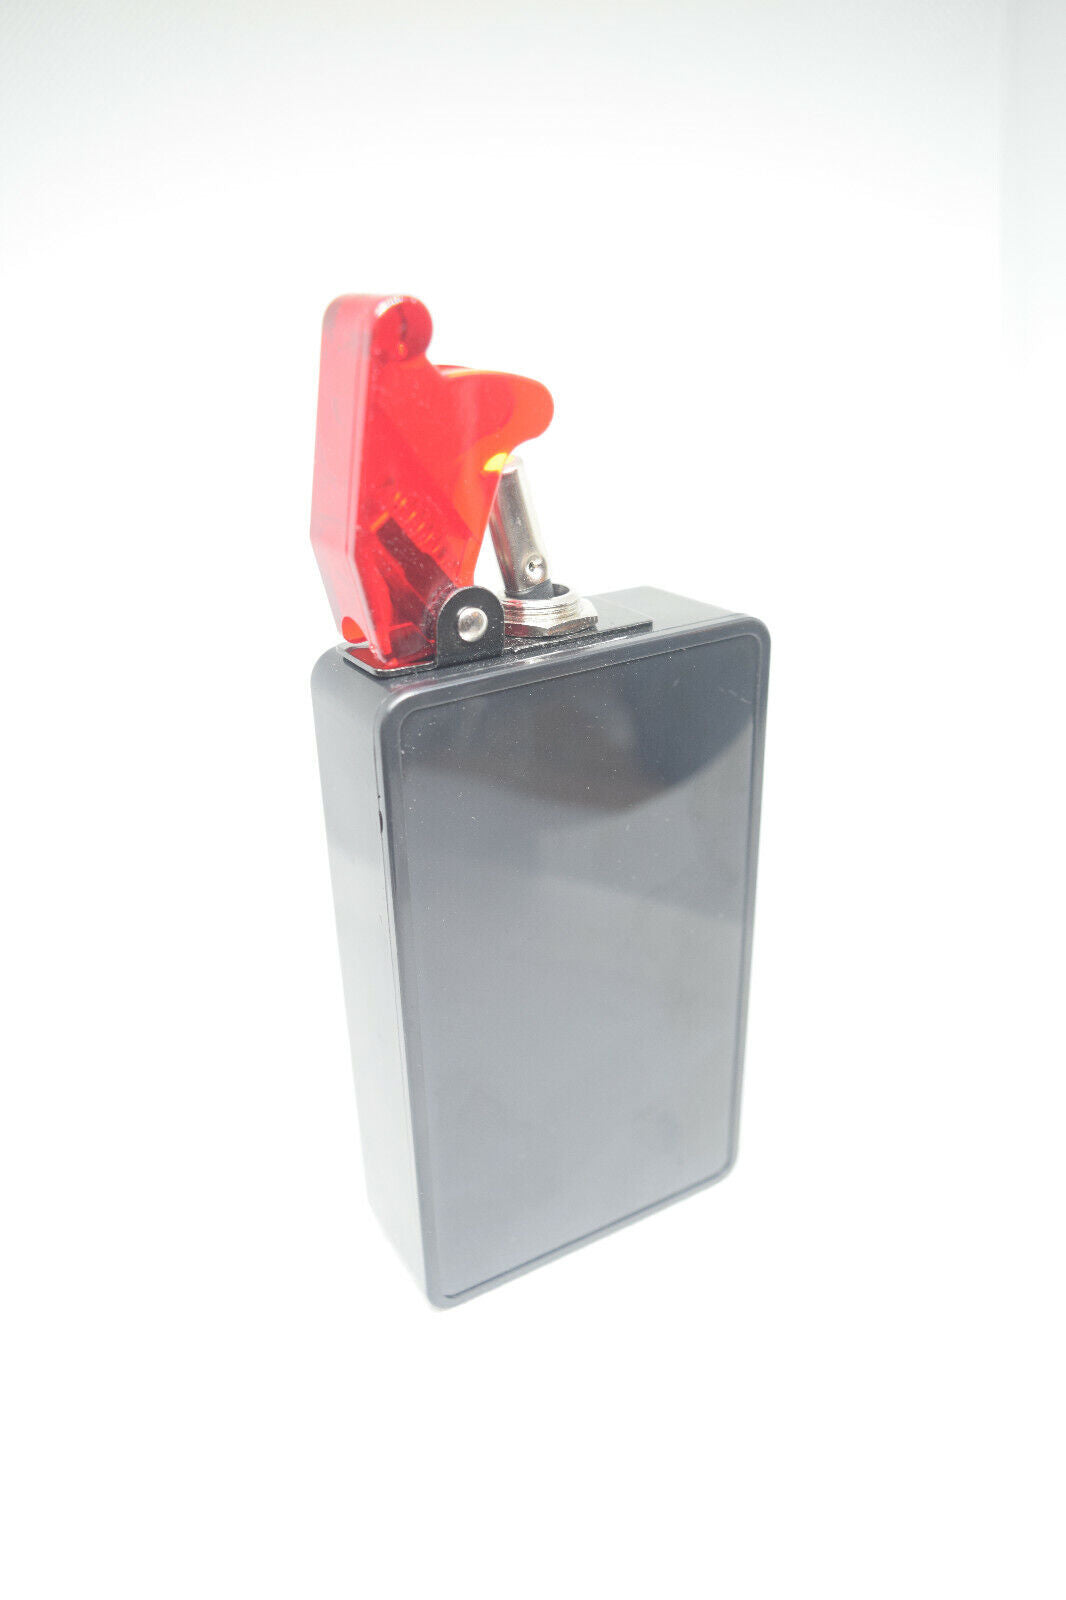 Light Up Remote Bomb Detonator (C4, Plastic Explosive) Prop for Cosplay, Theater